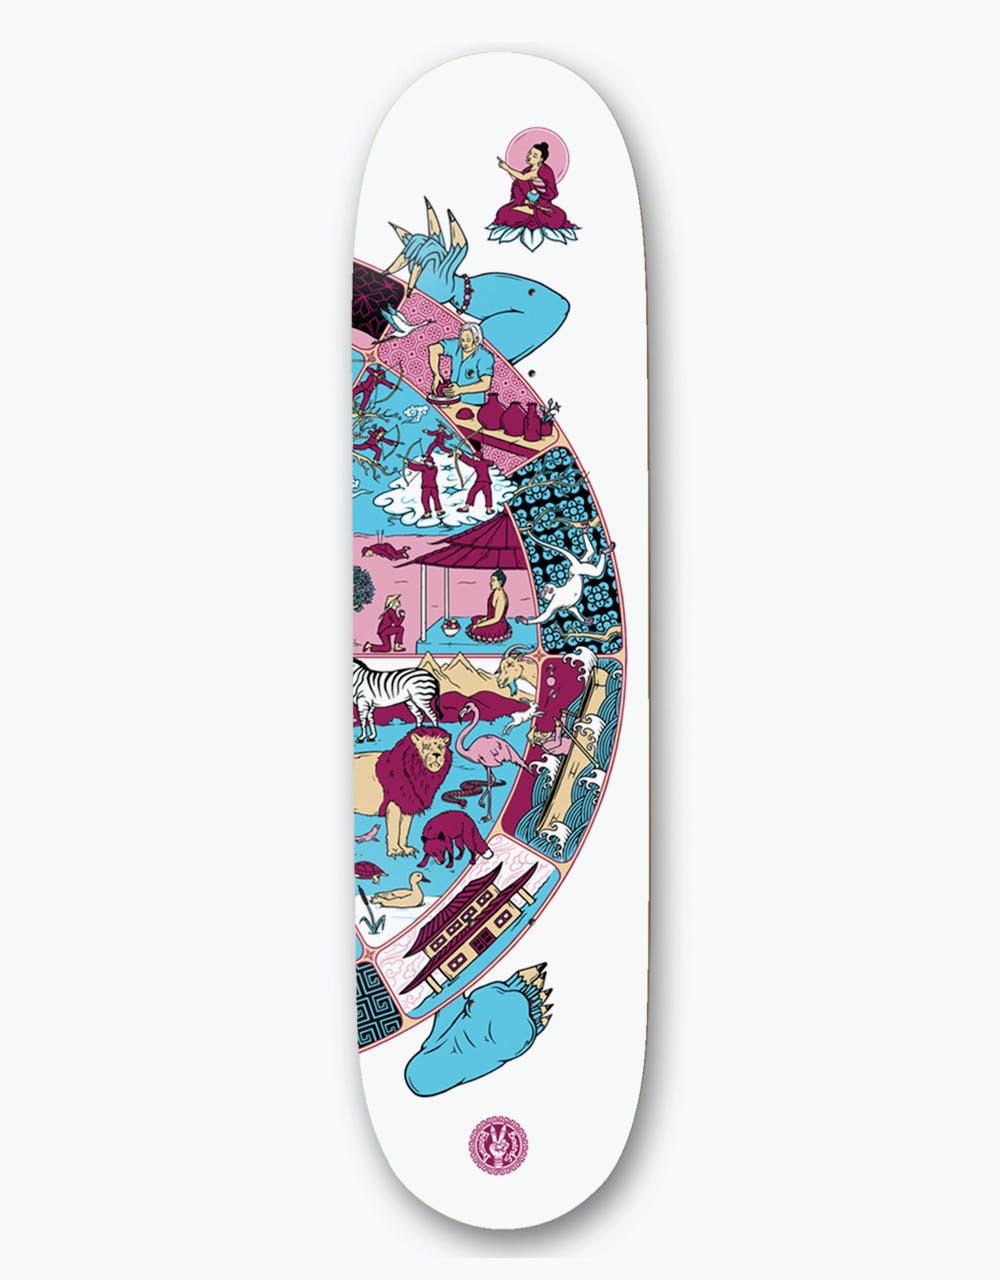 Drawing Boards Wheel of Life 3 Skateboard Deck - 8.3"